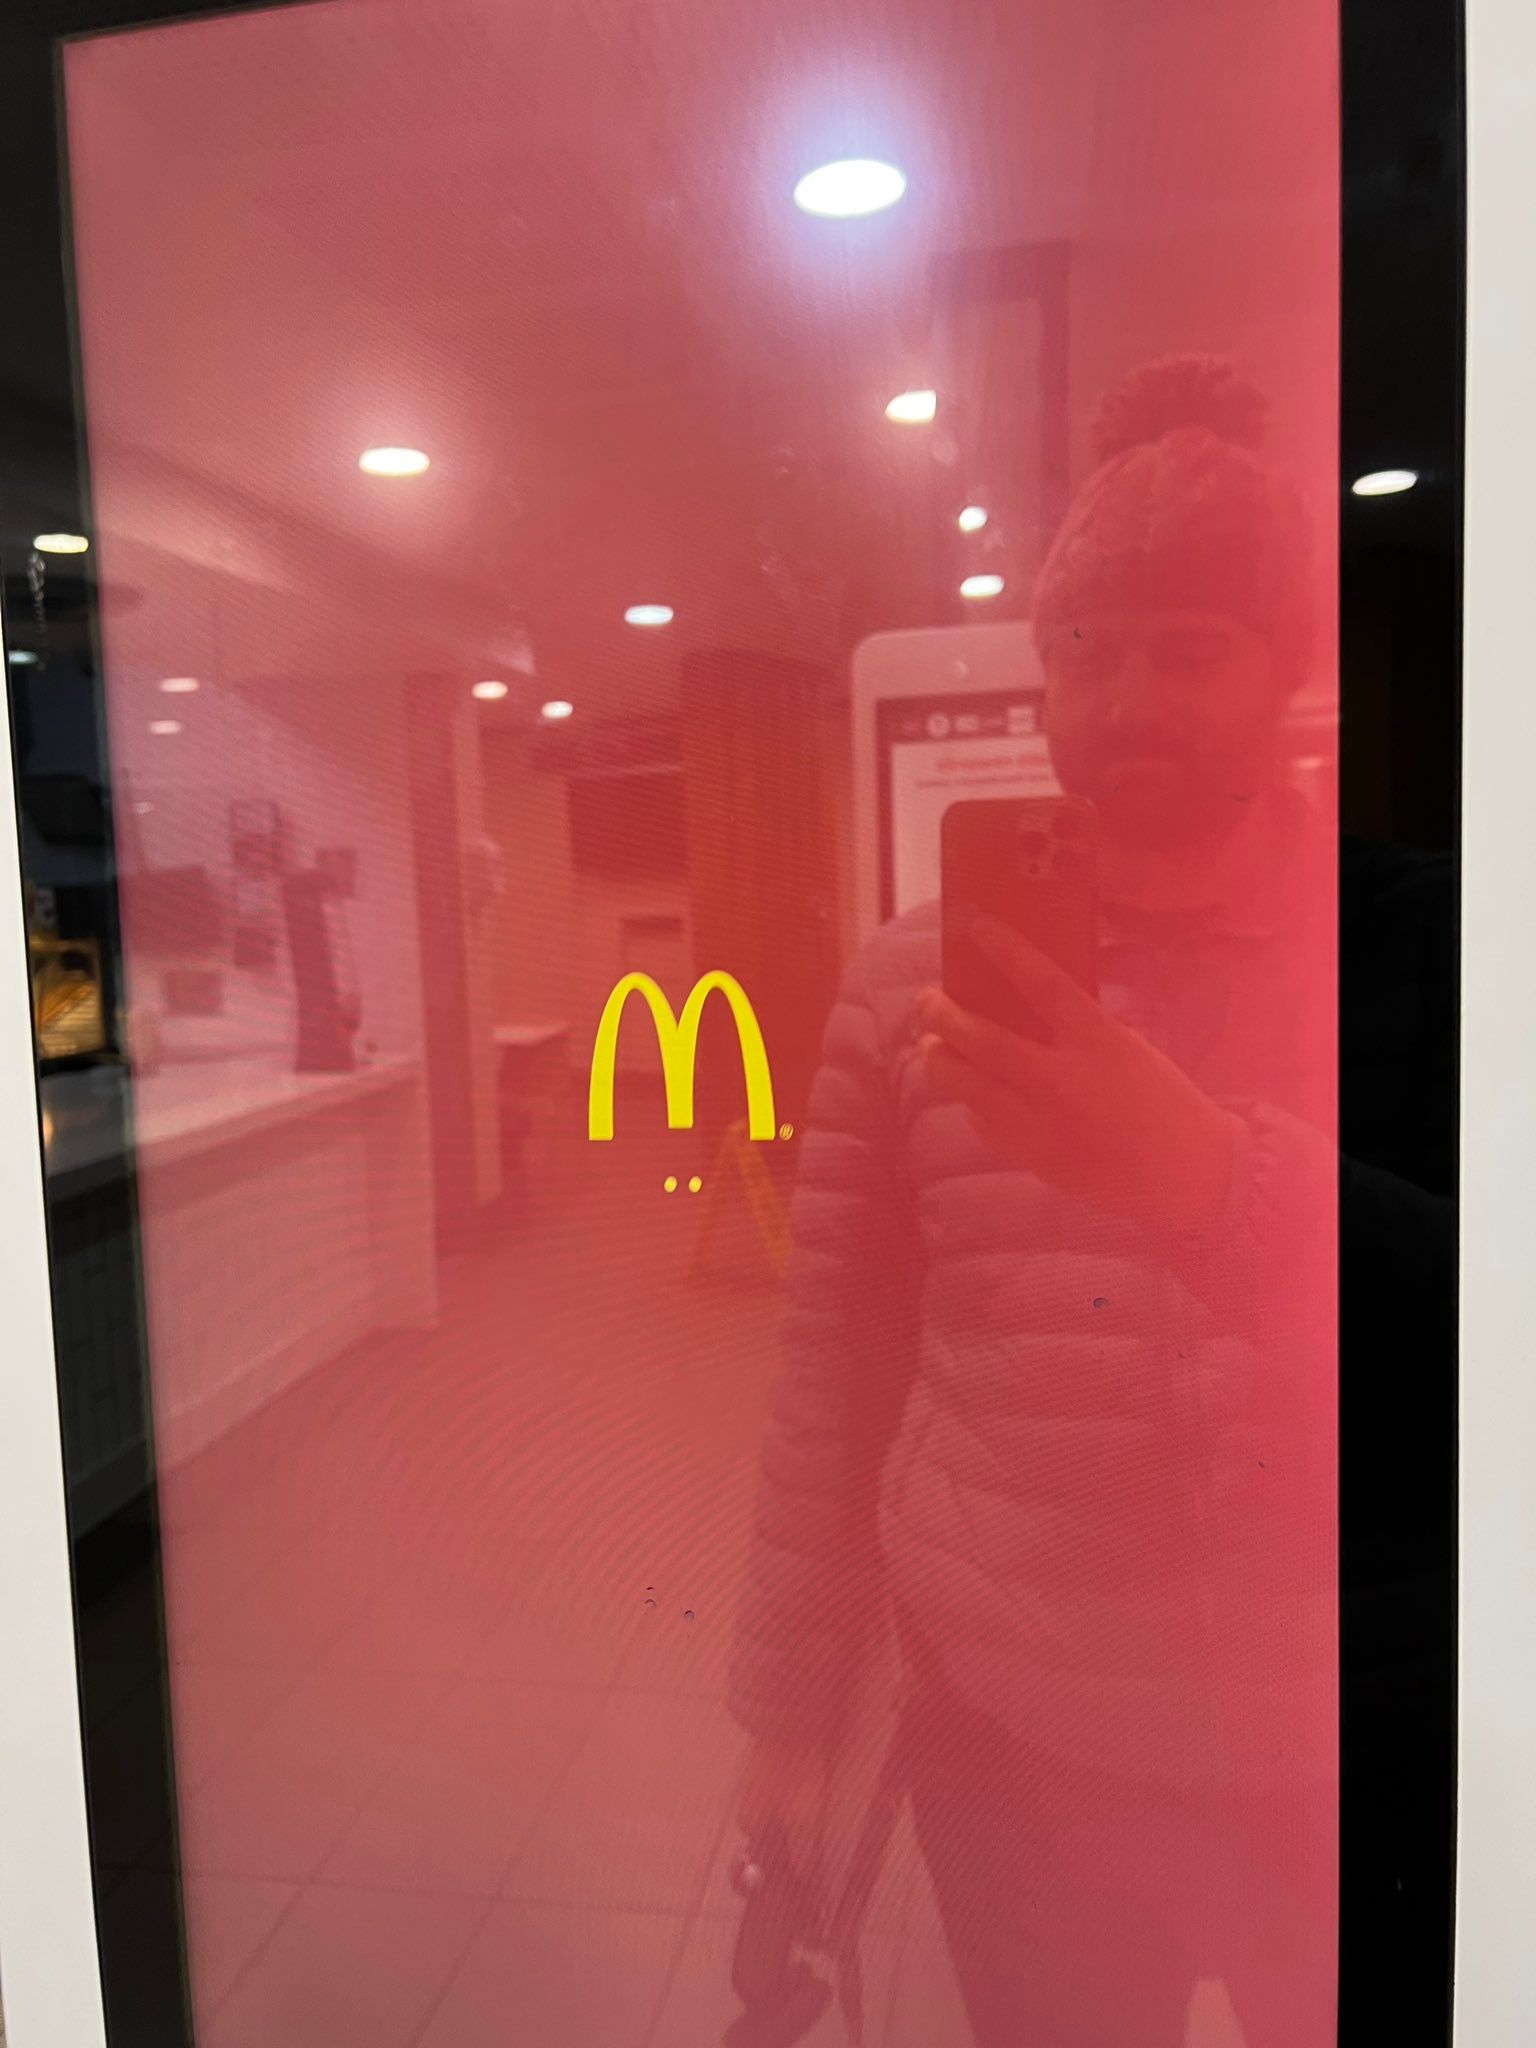 Why are McDonald’s Self Service Kiosks so hackable?